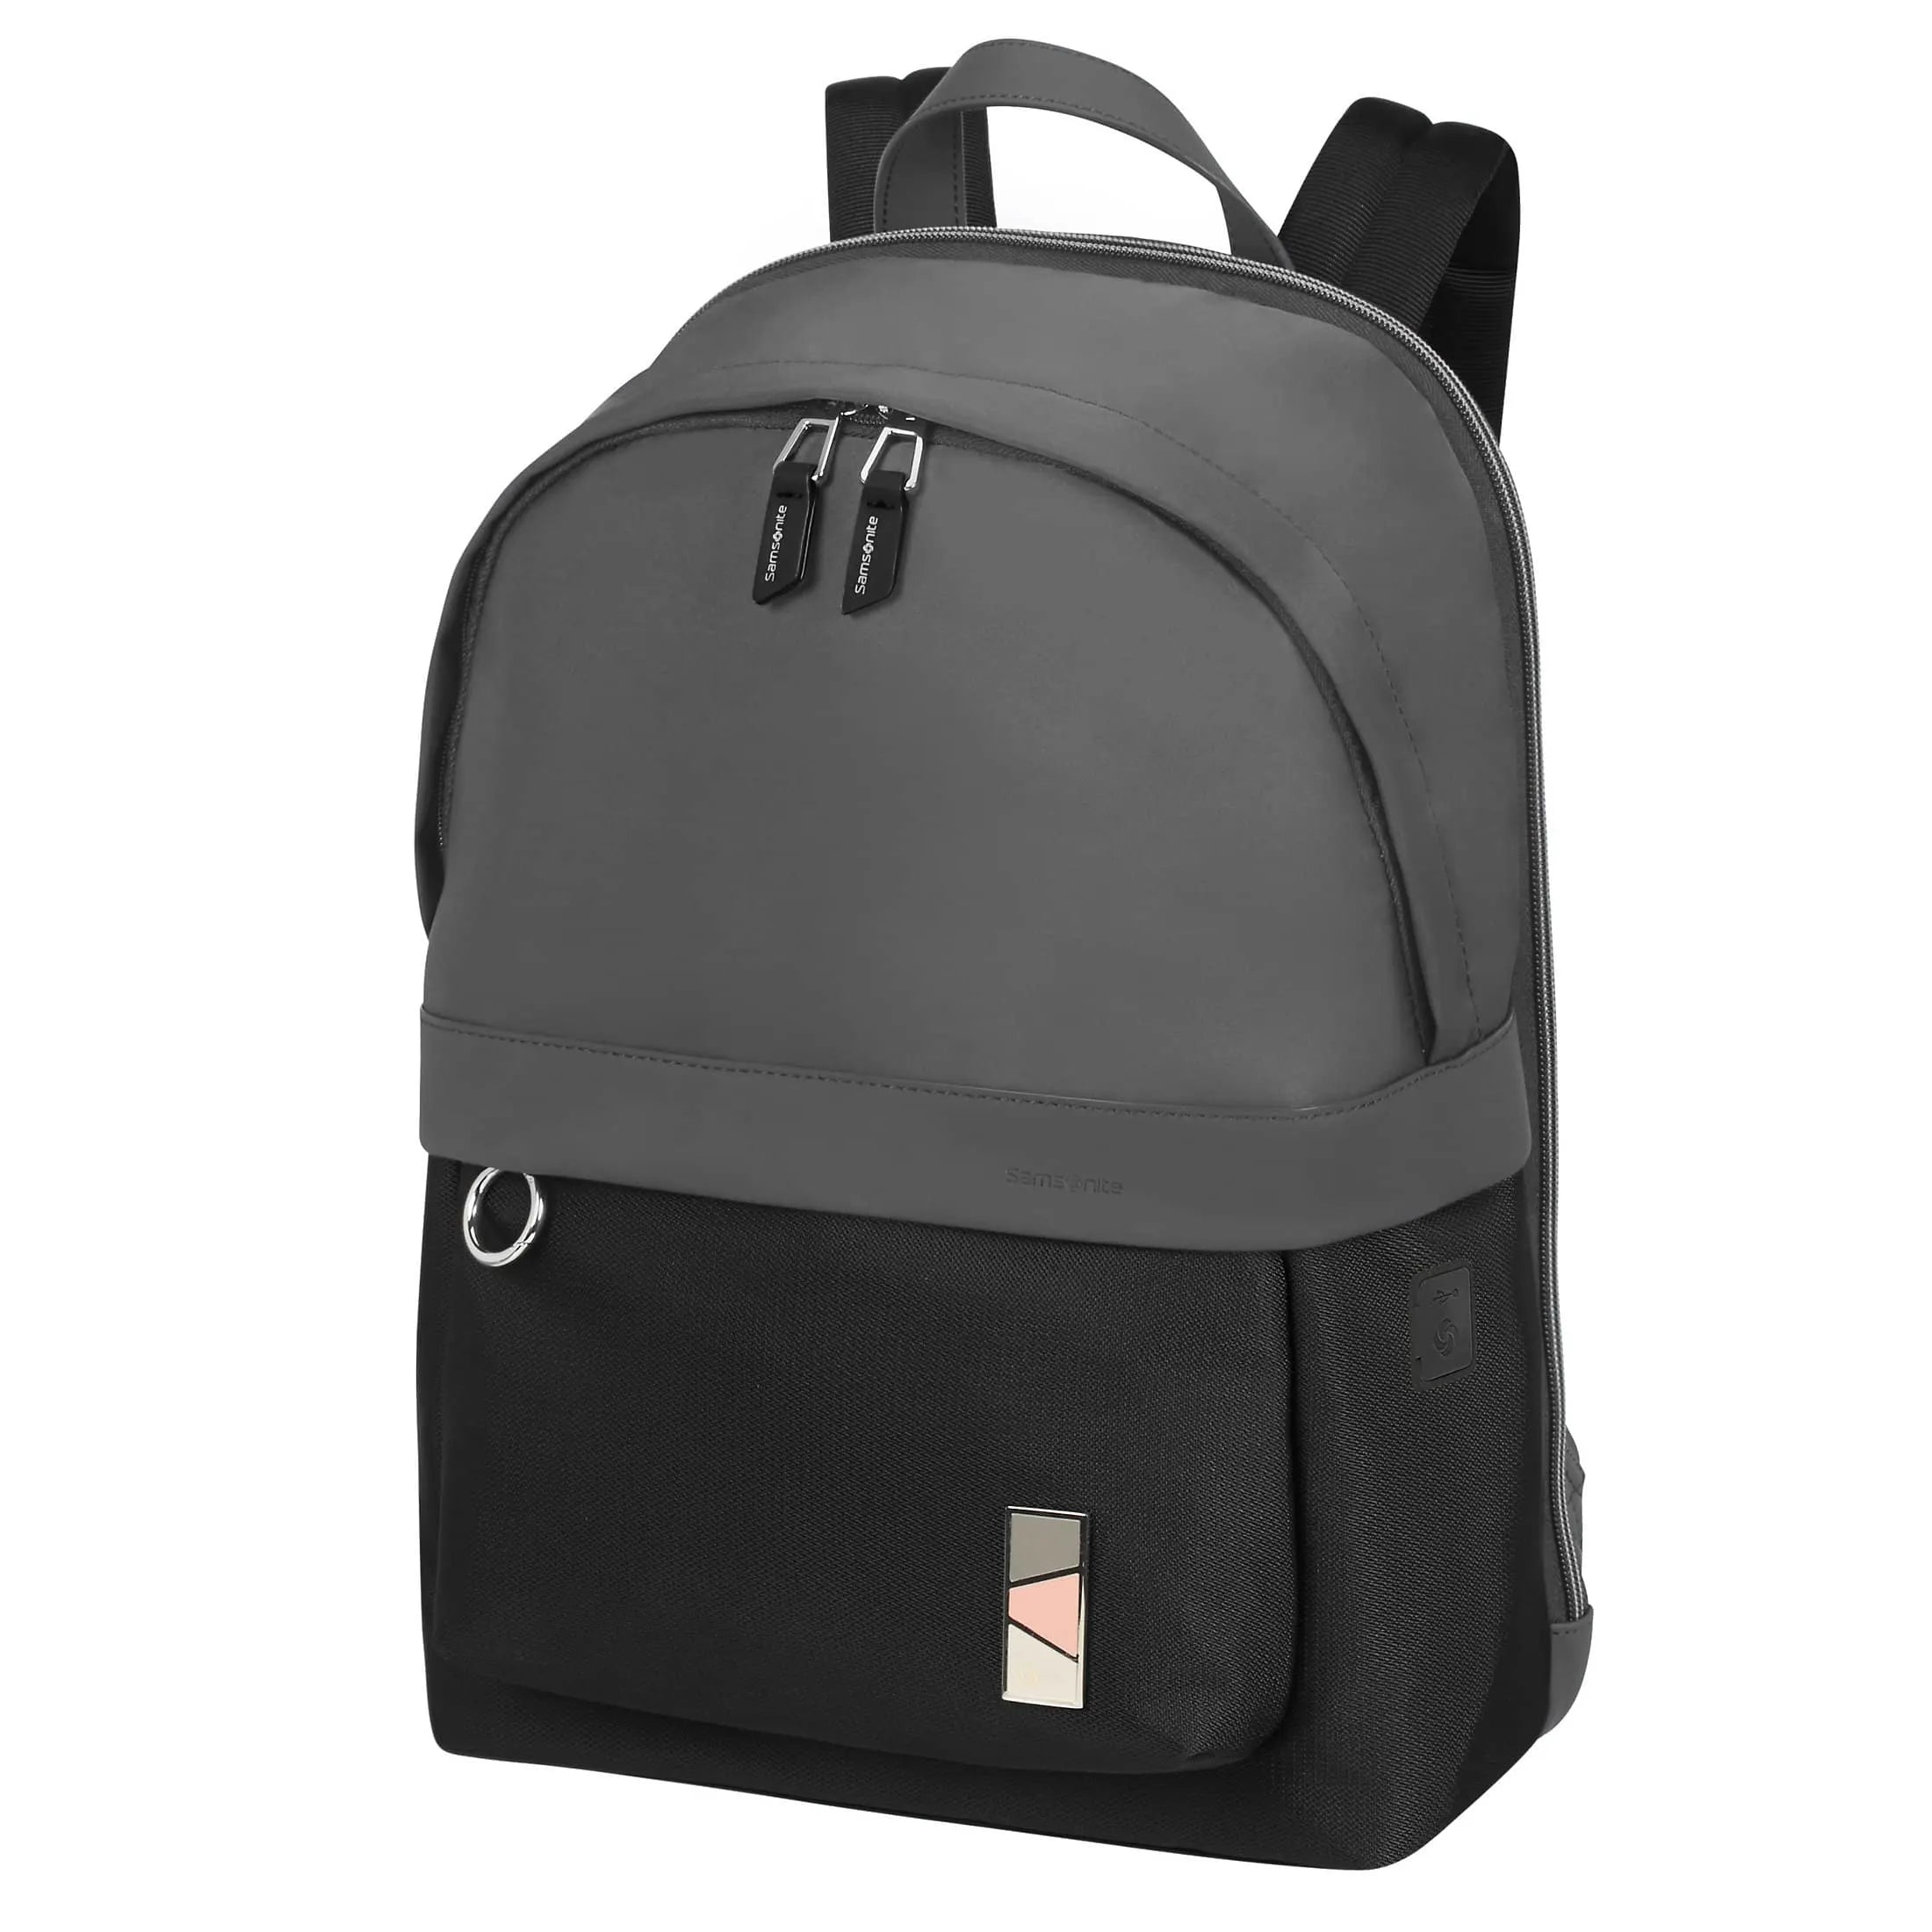 Samsonite Foldable Backpack | EverythingBranded USA